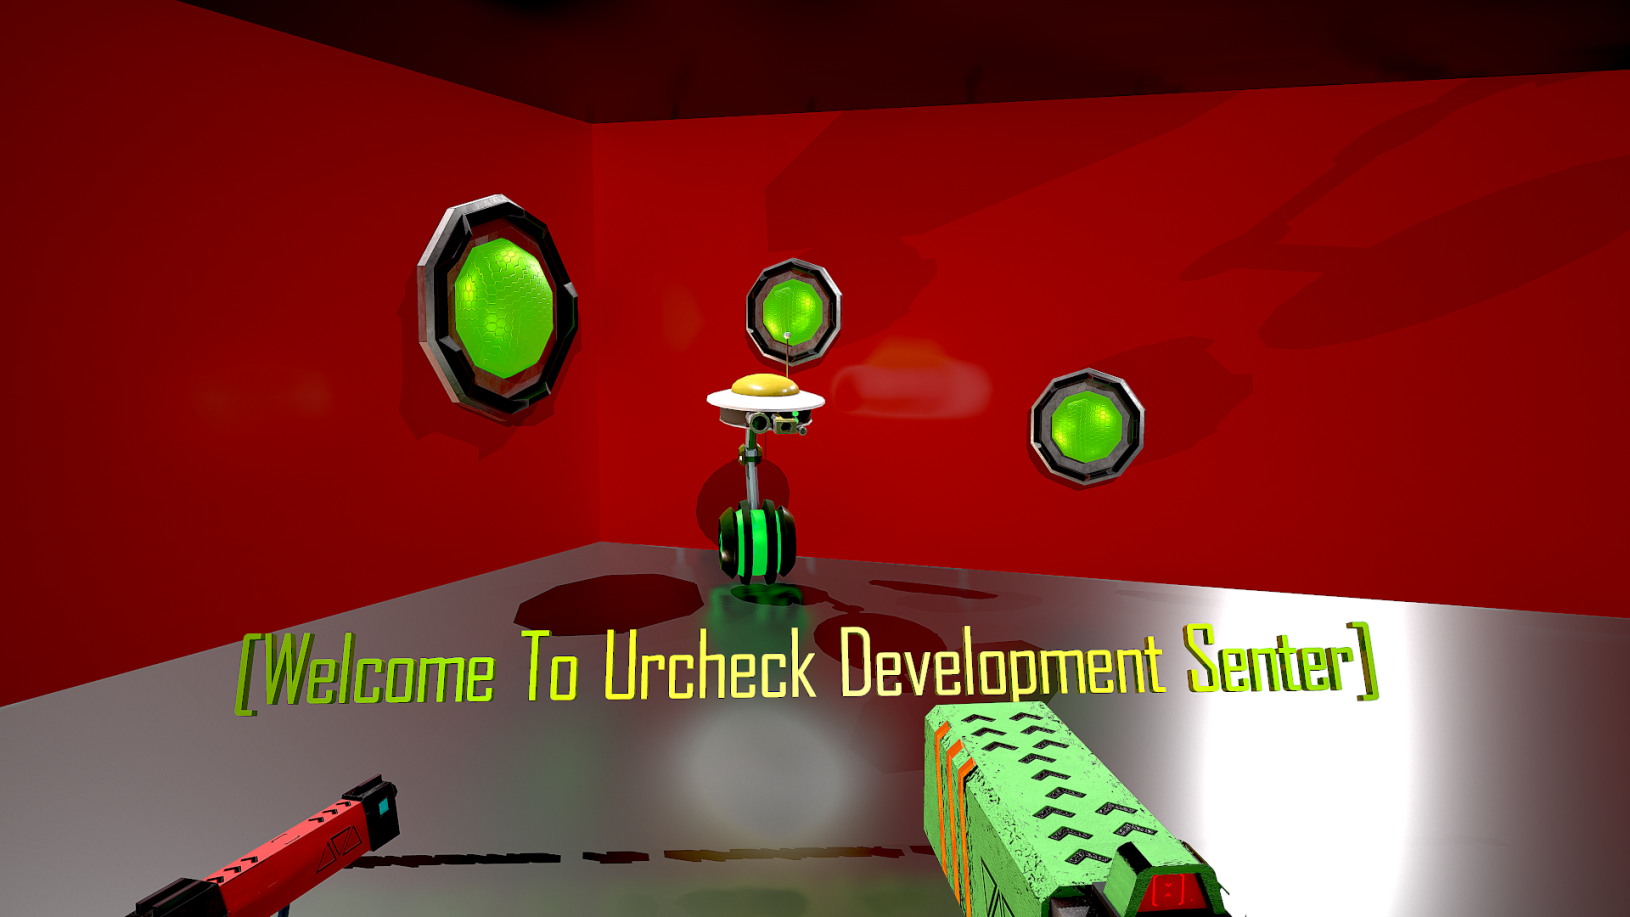 Urcheck Development Senter